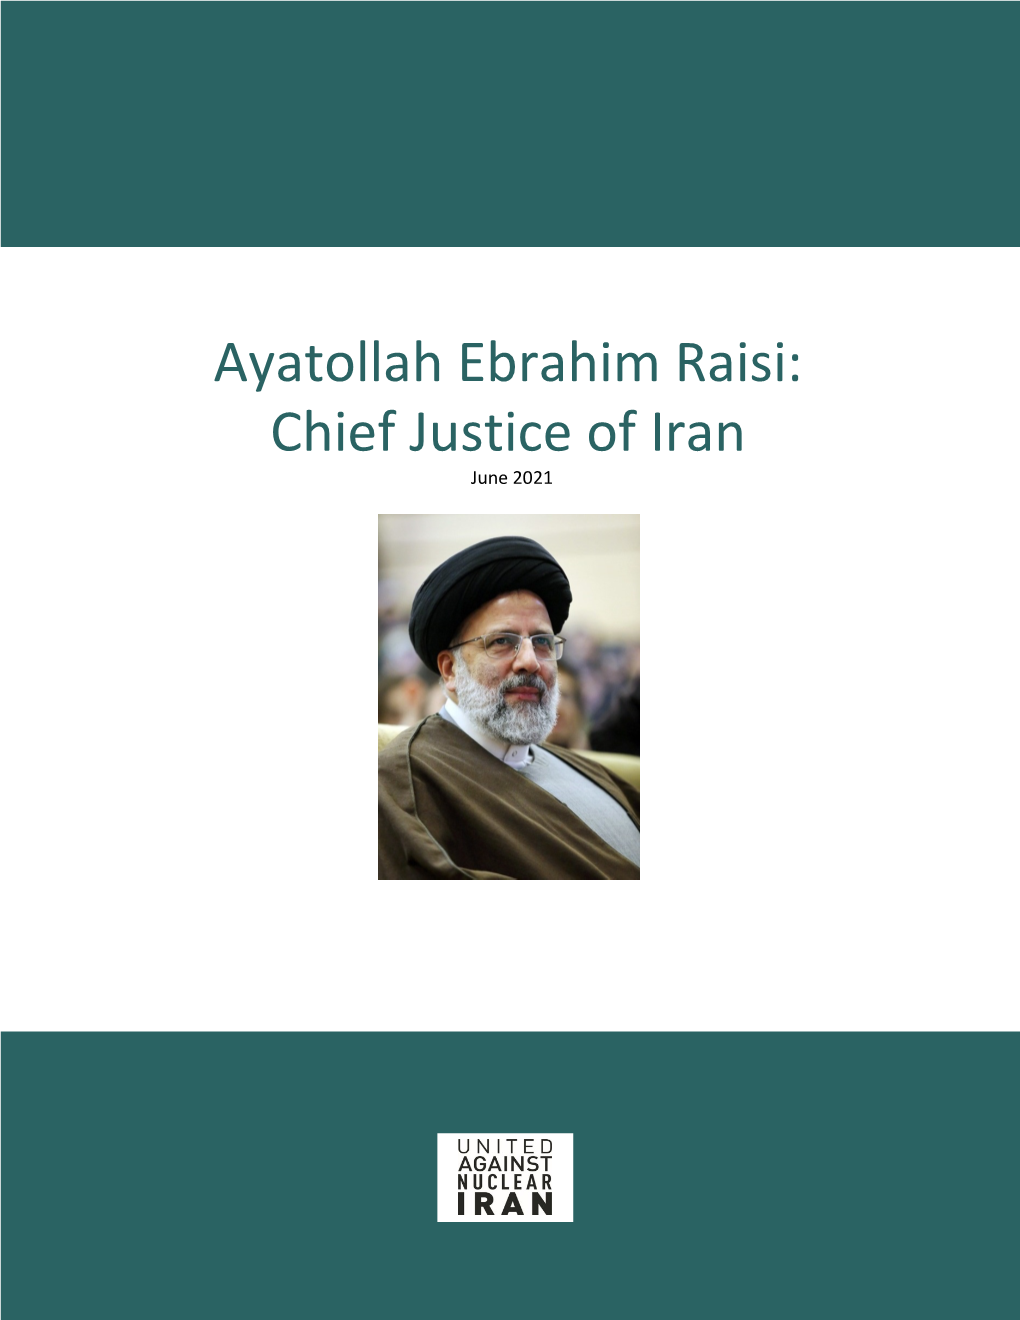 Ayatollah Ebrahim Raisi: Chief Justice of Iran June 2021